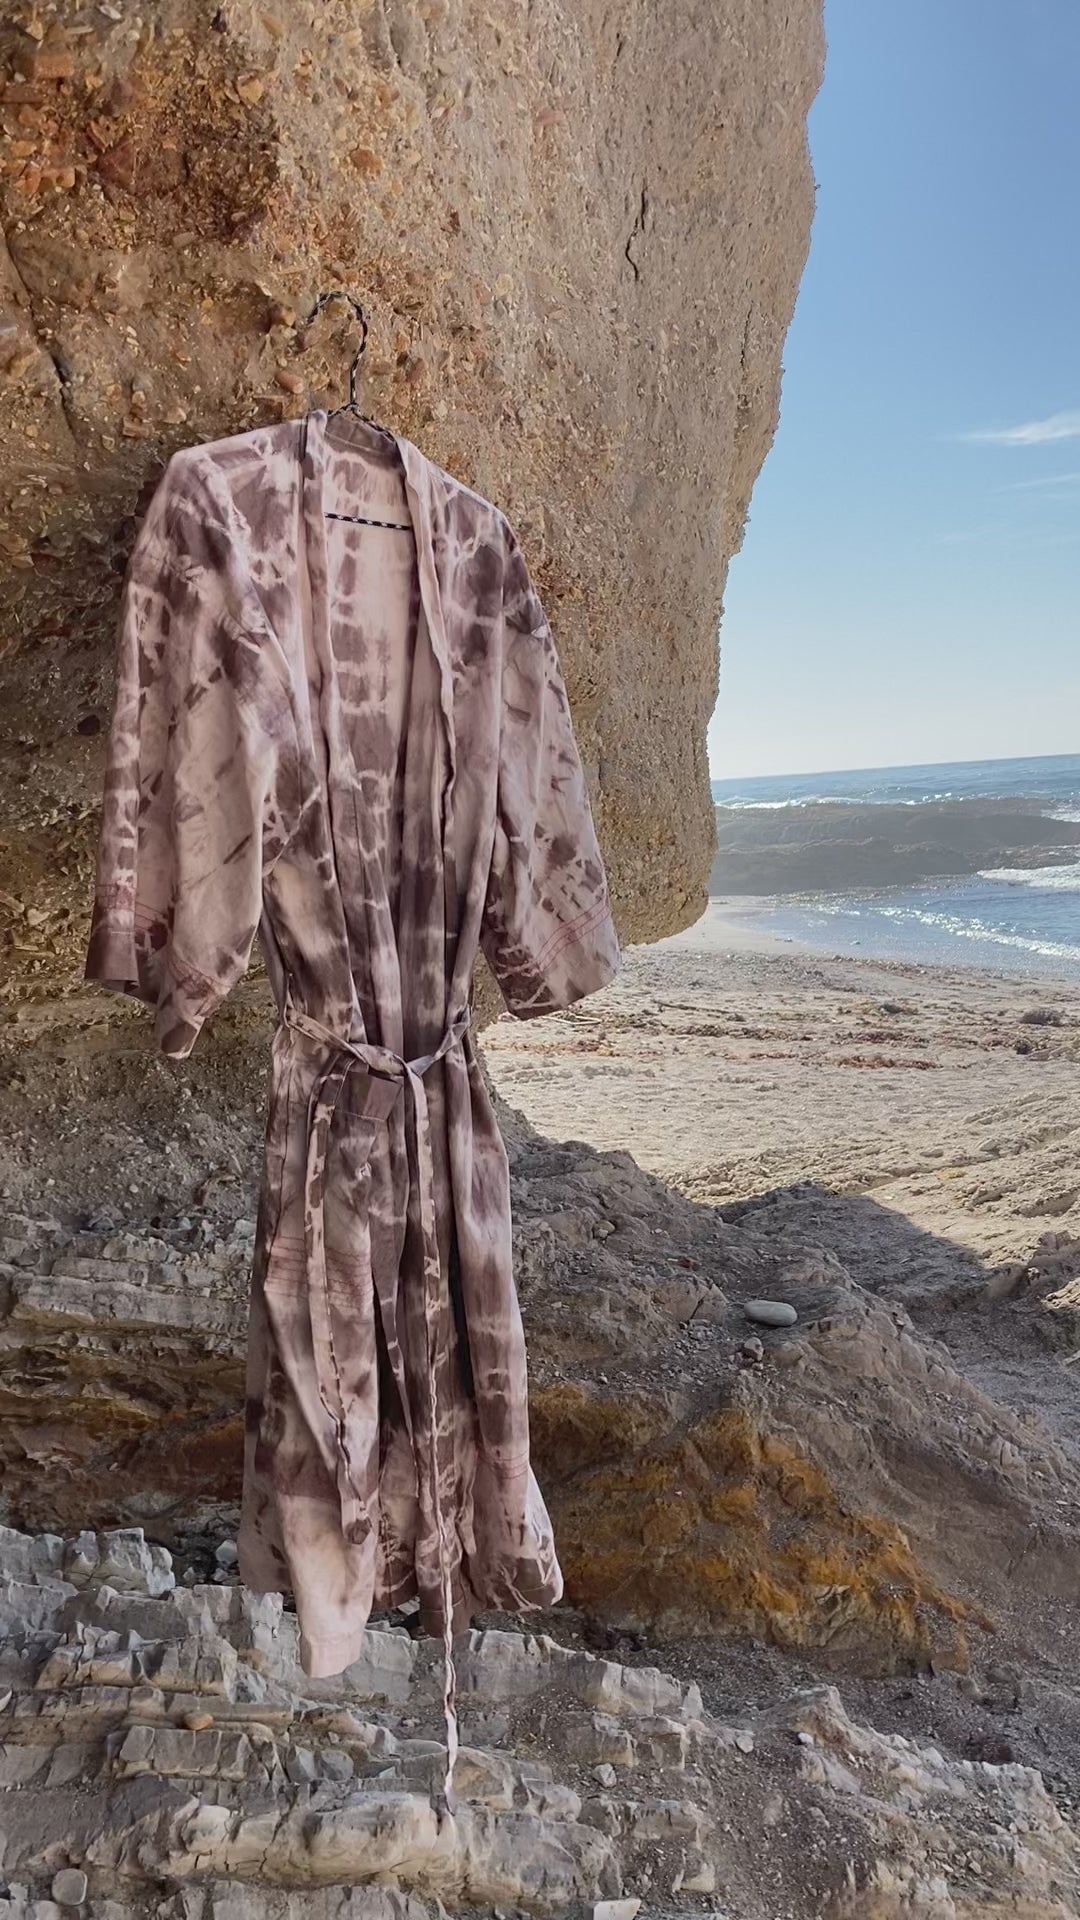 the robe